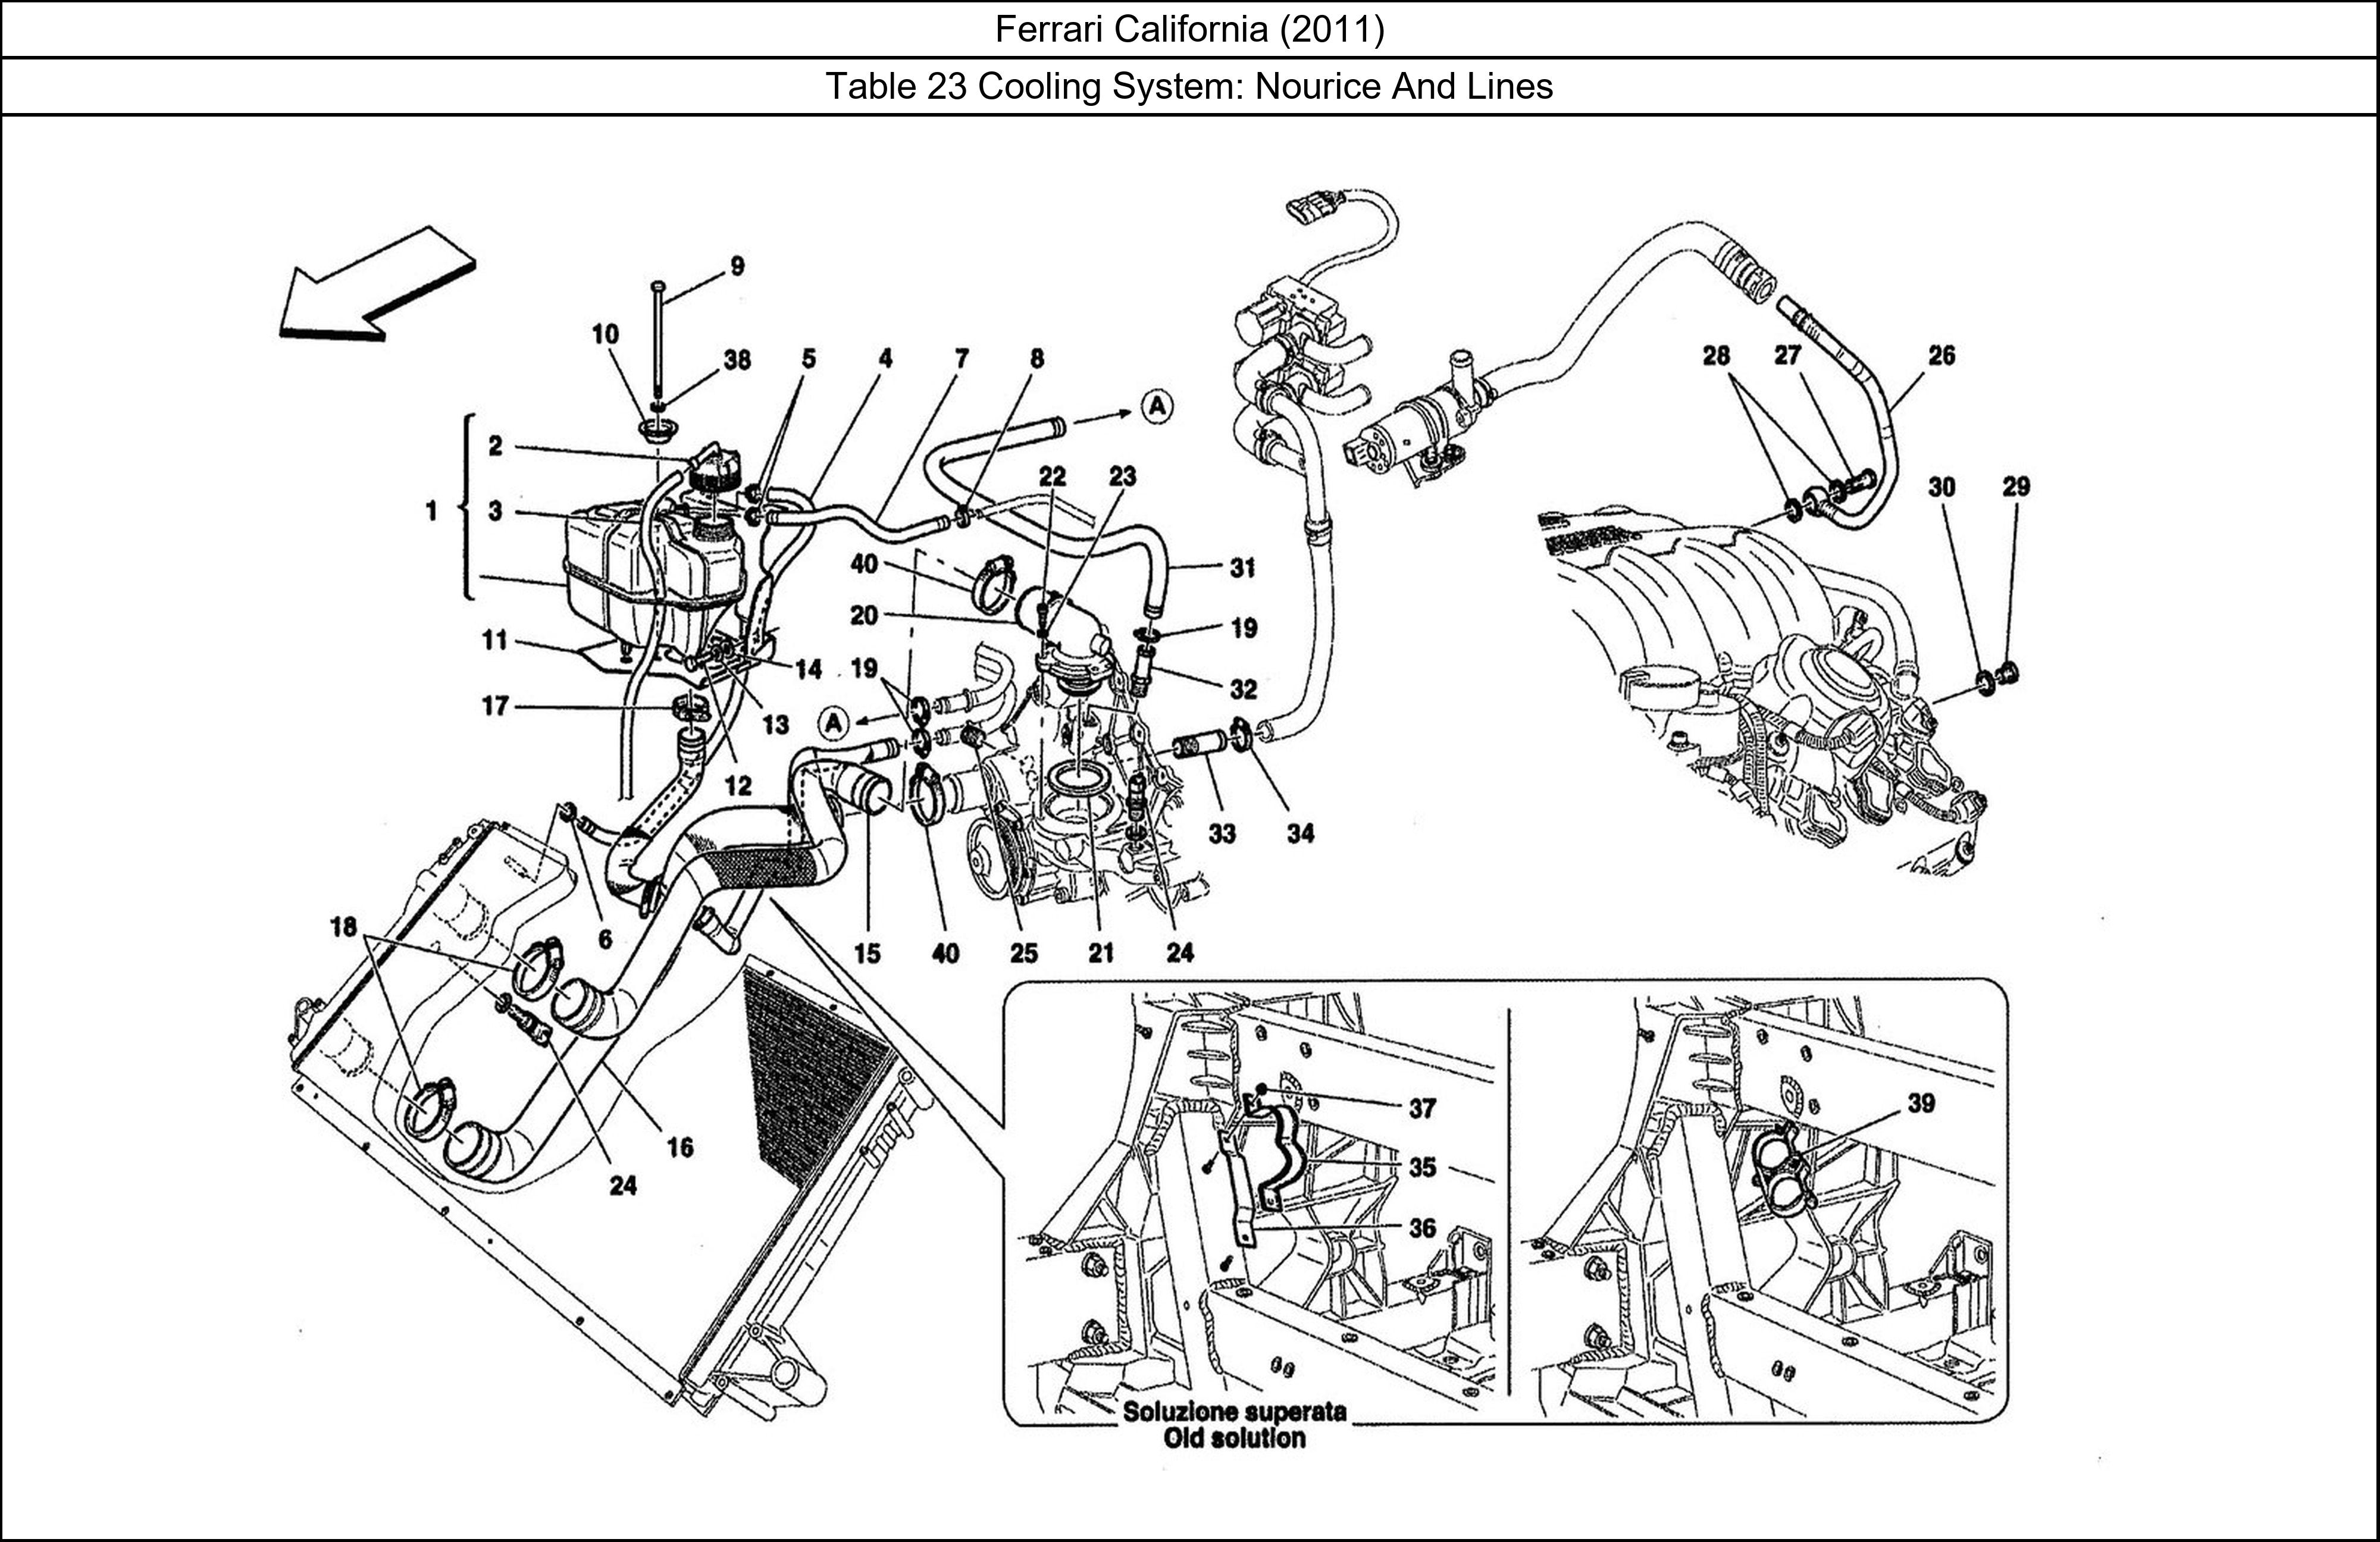 Ferrari Parts Ferrari California (2011) Table 23 Cooling System: Nourice And Lines